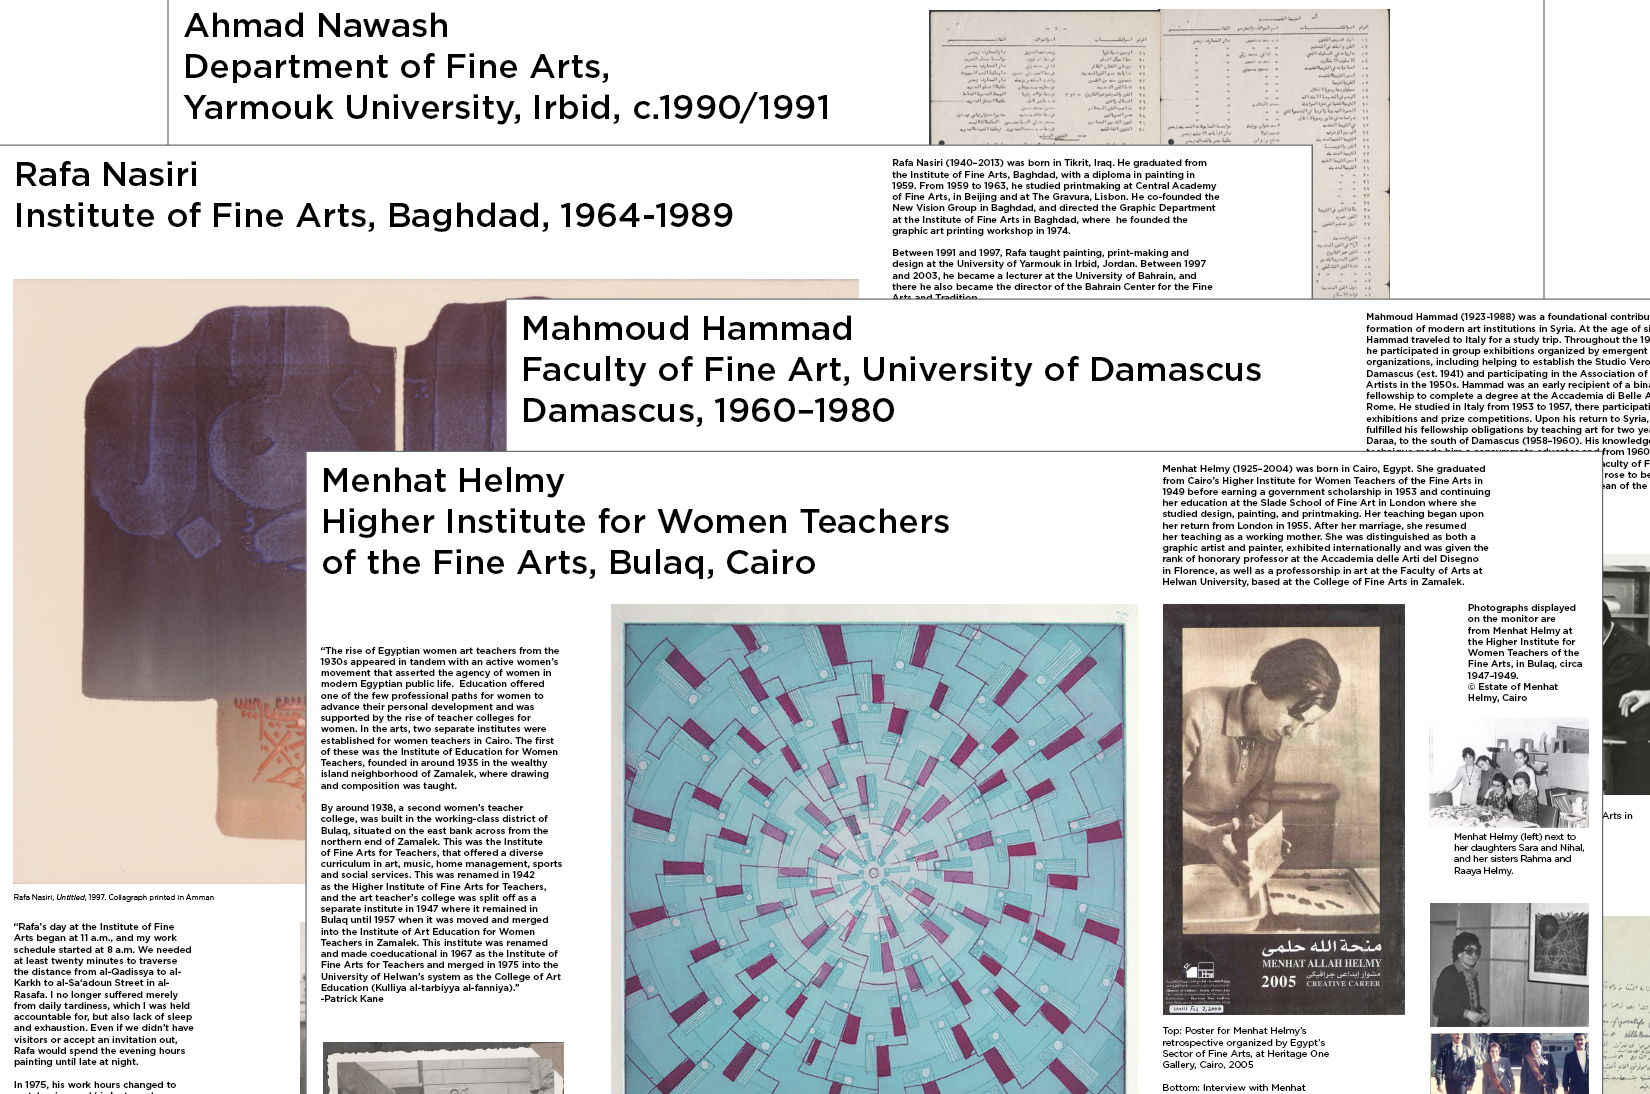 On exhibit: Art Education in Arab Cities (1938 – 2003)